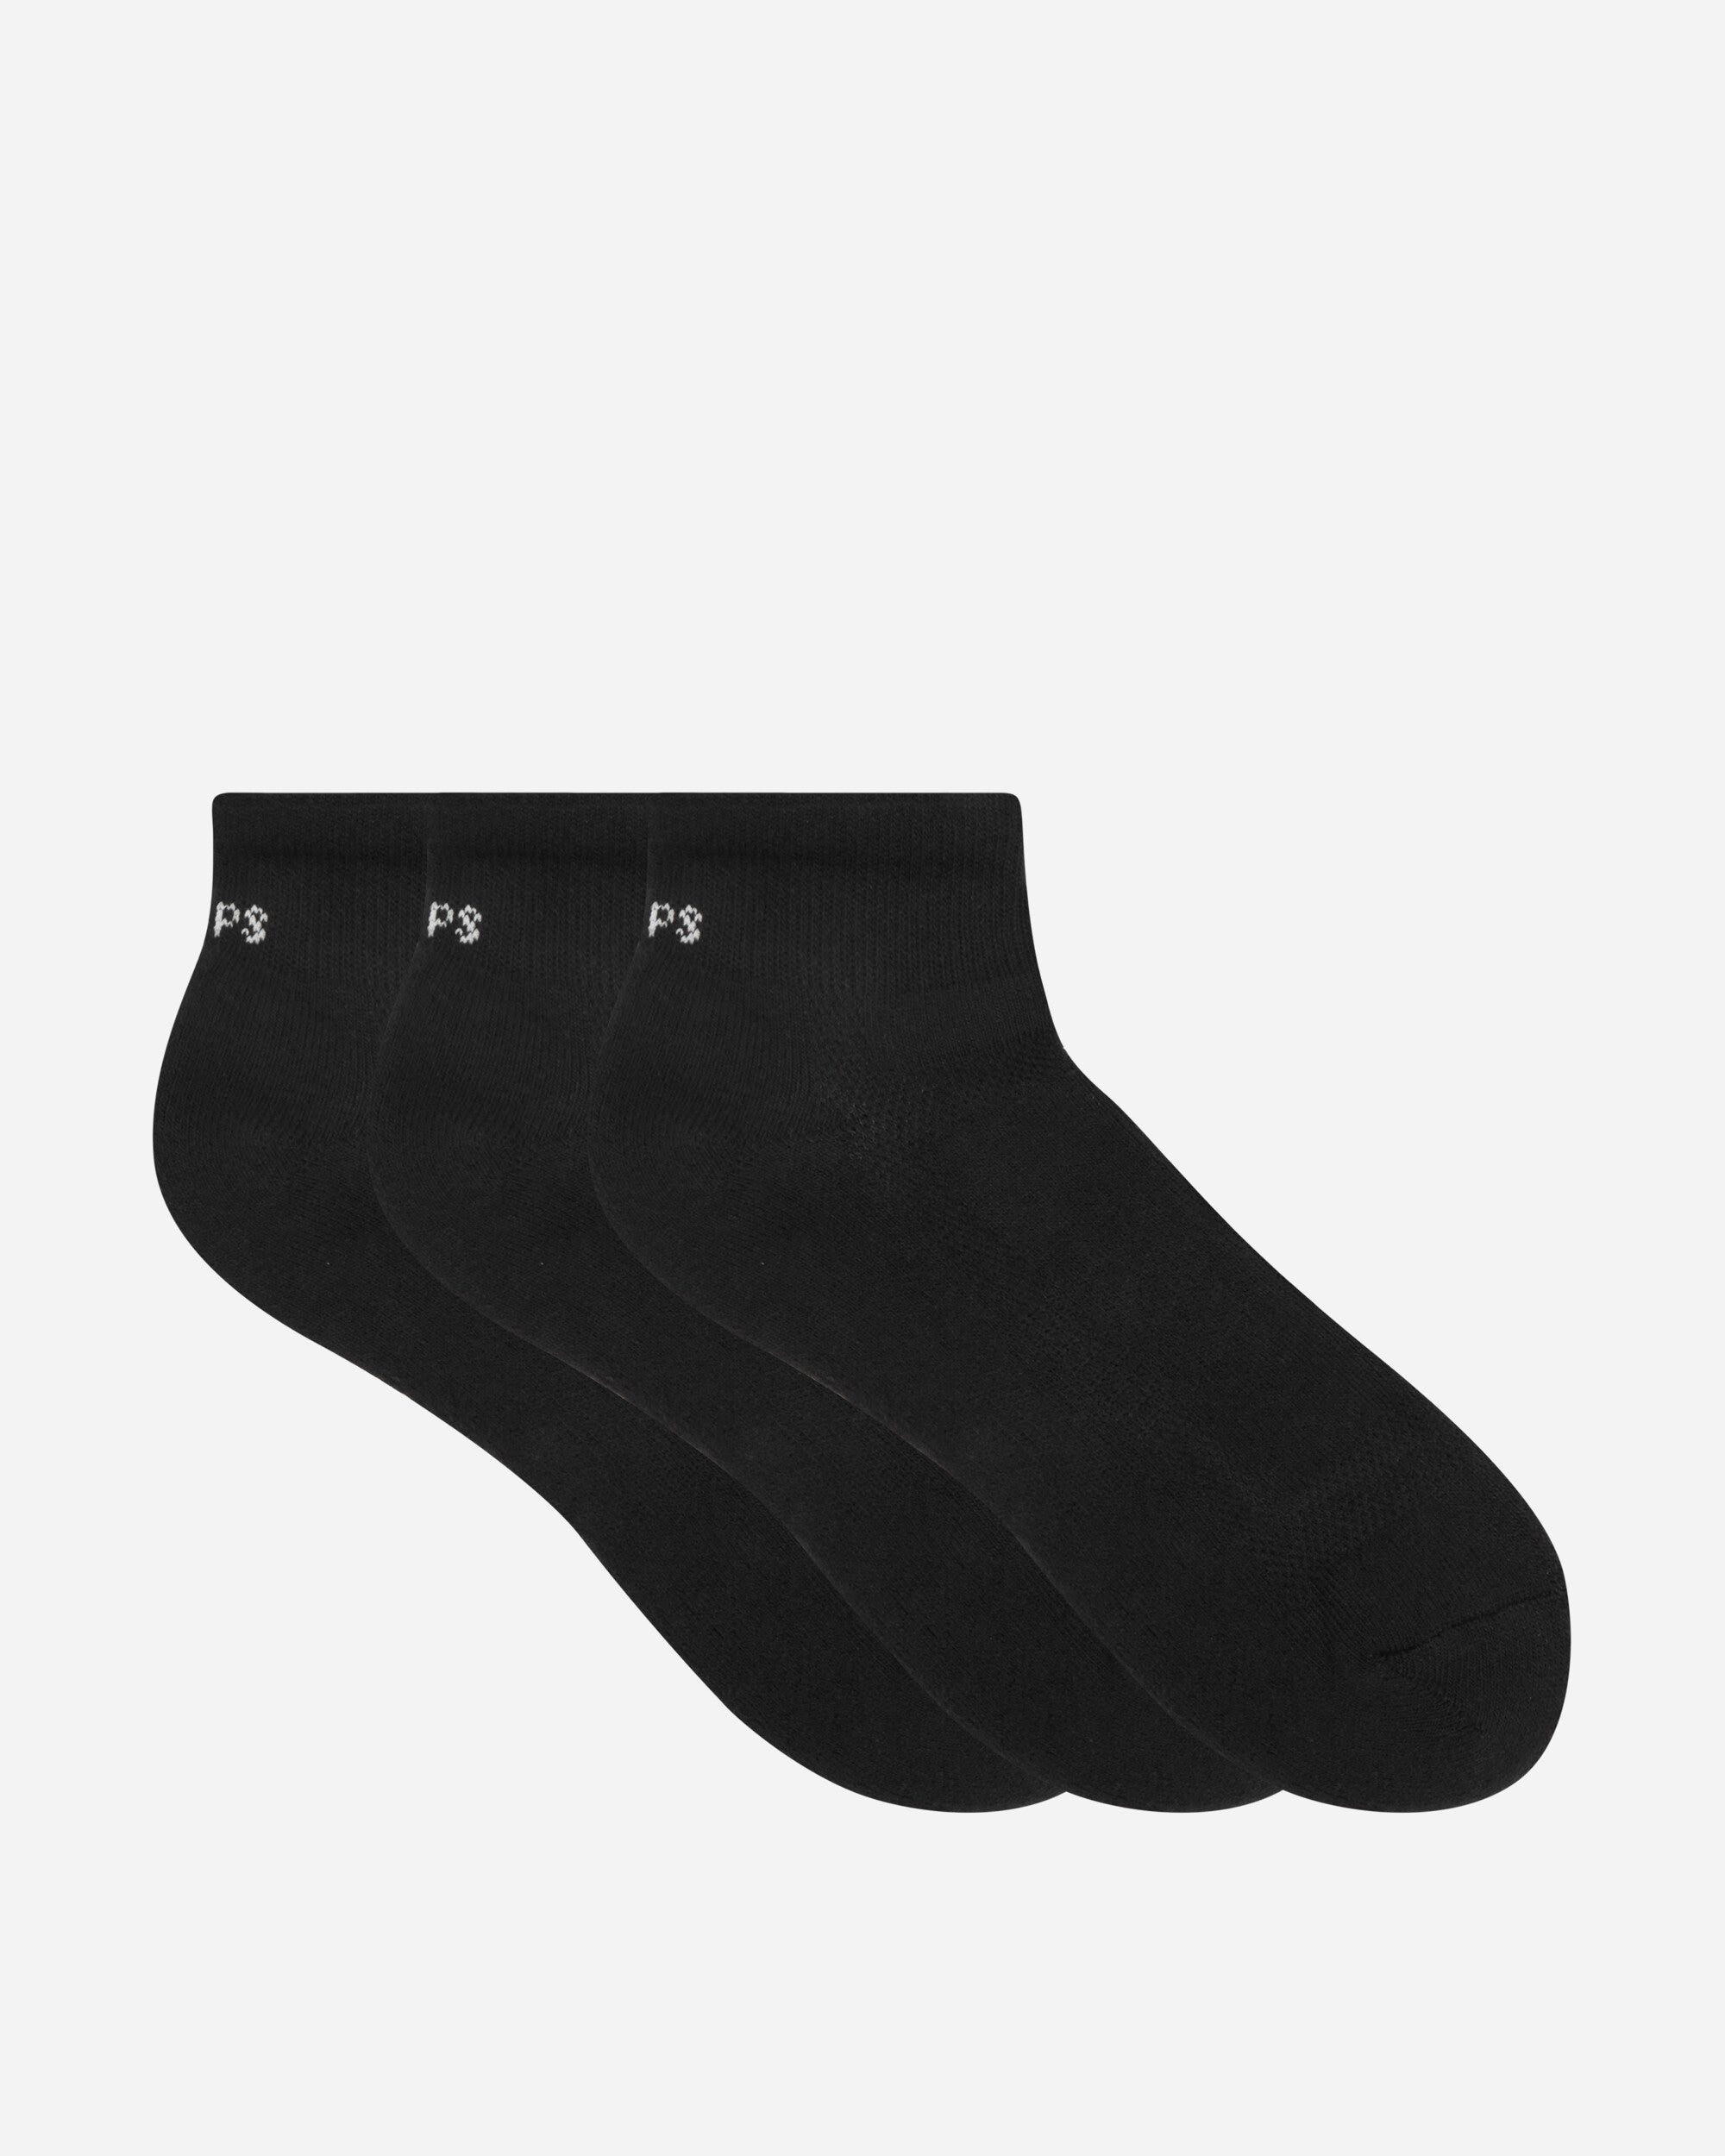 Skivvies Socks Black - 1